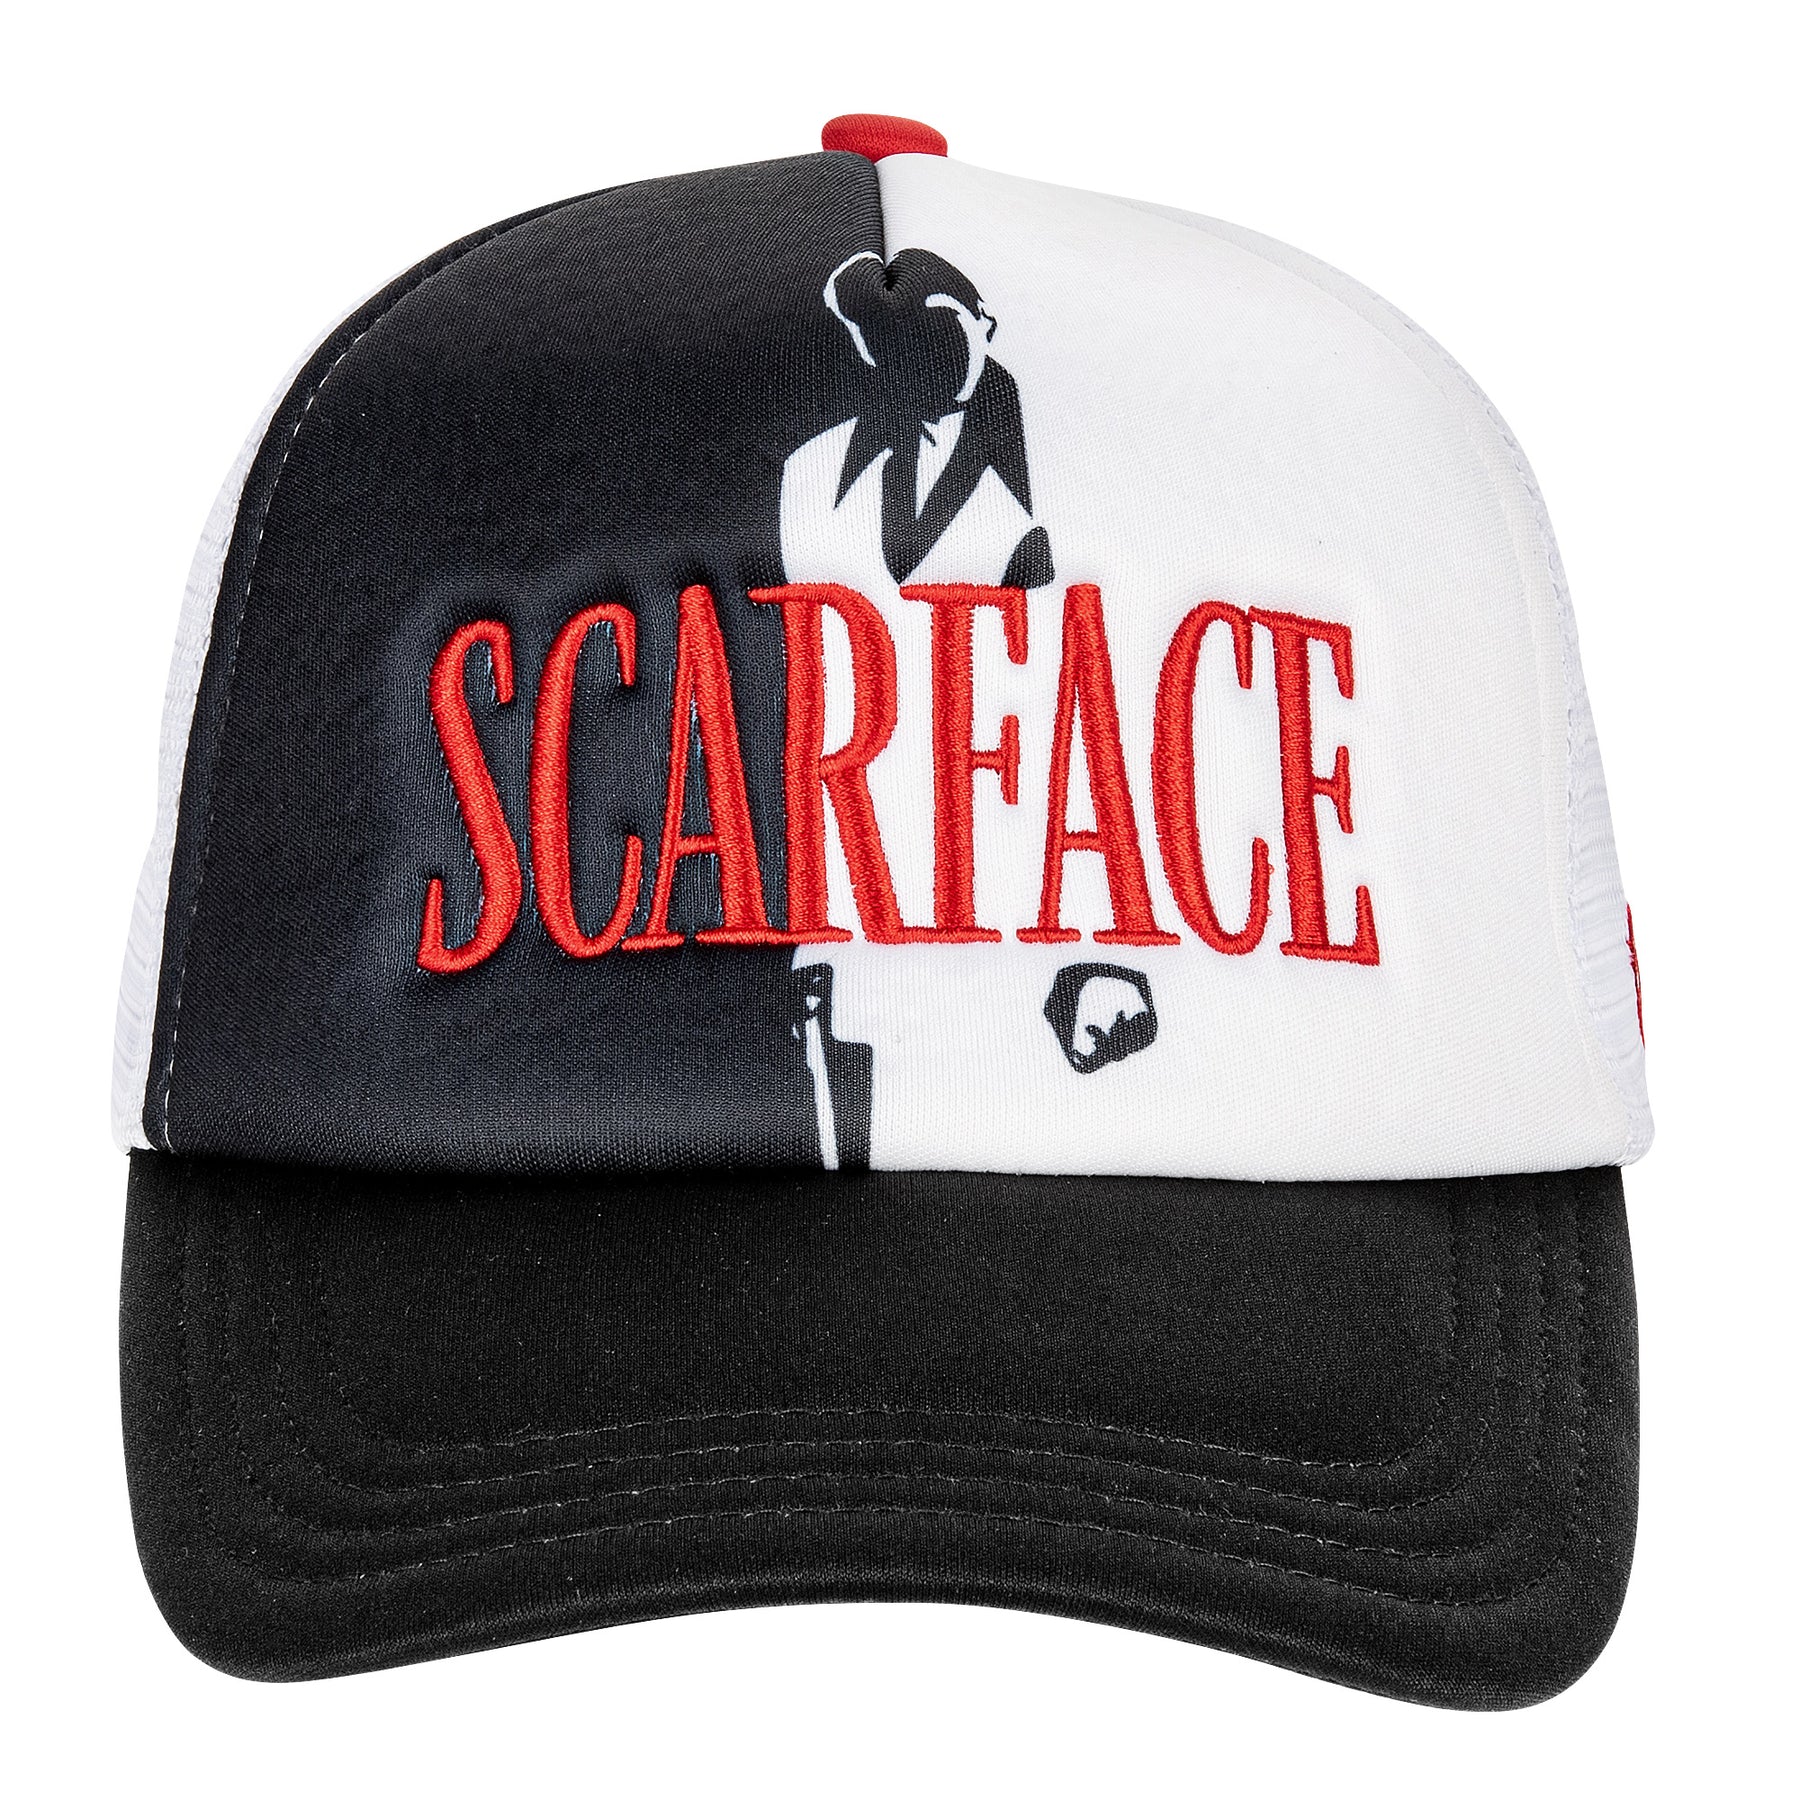 Odd Sox Scarface Trucker Hat – ODD SOX